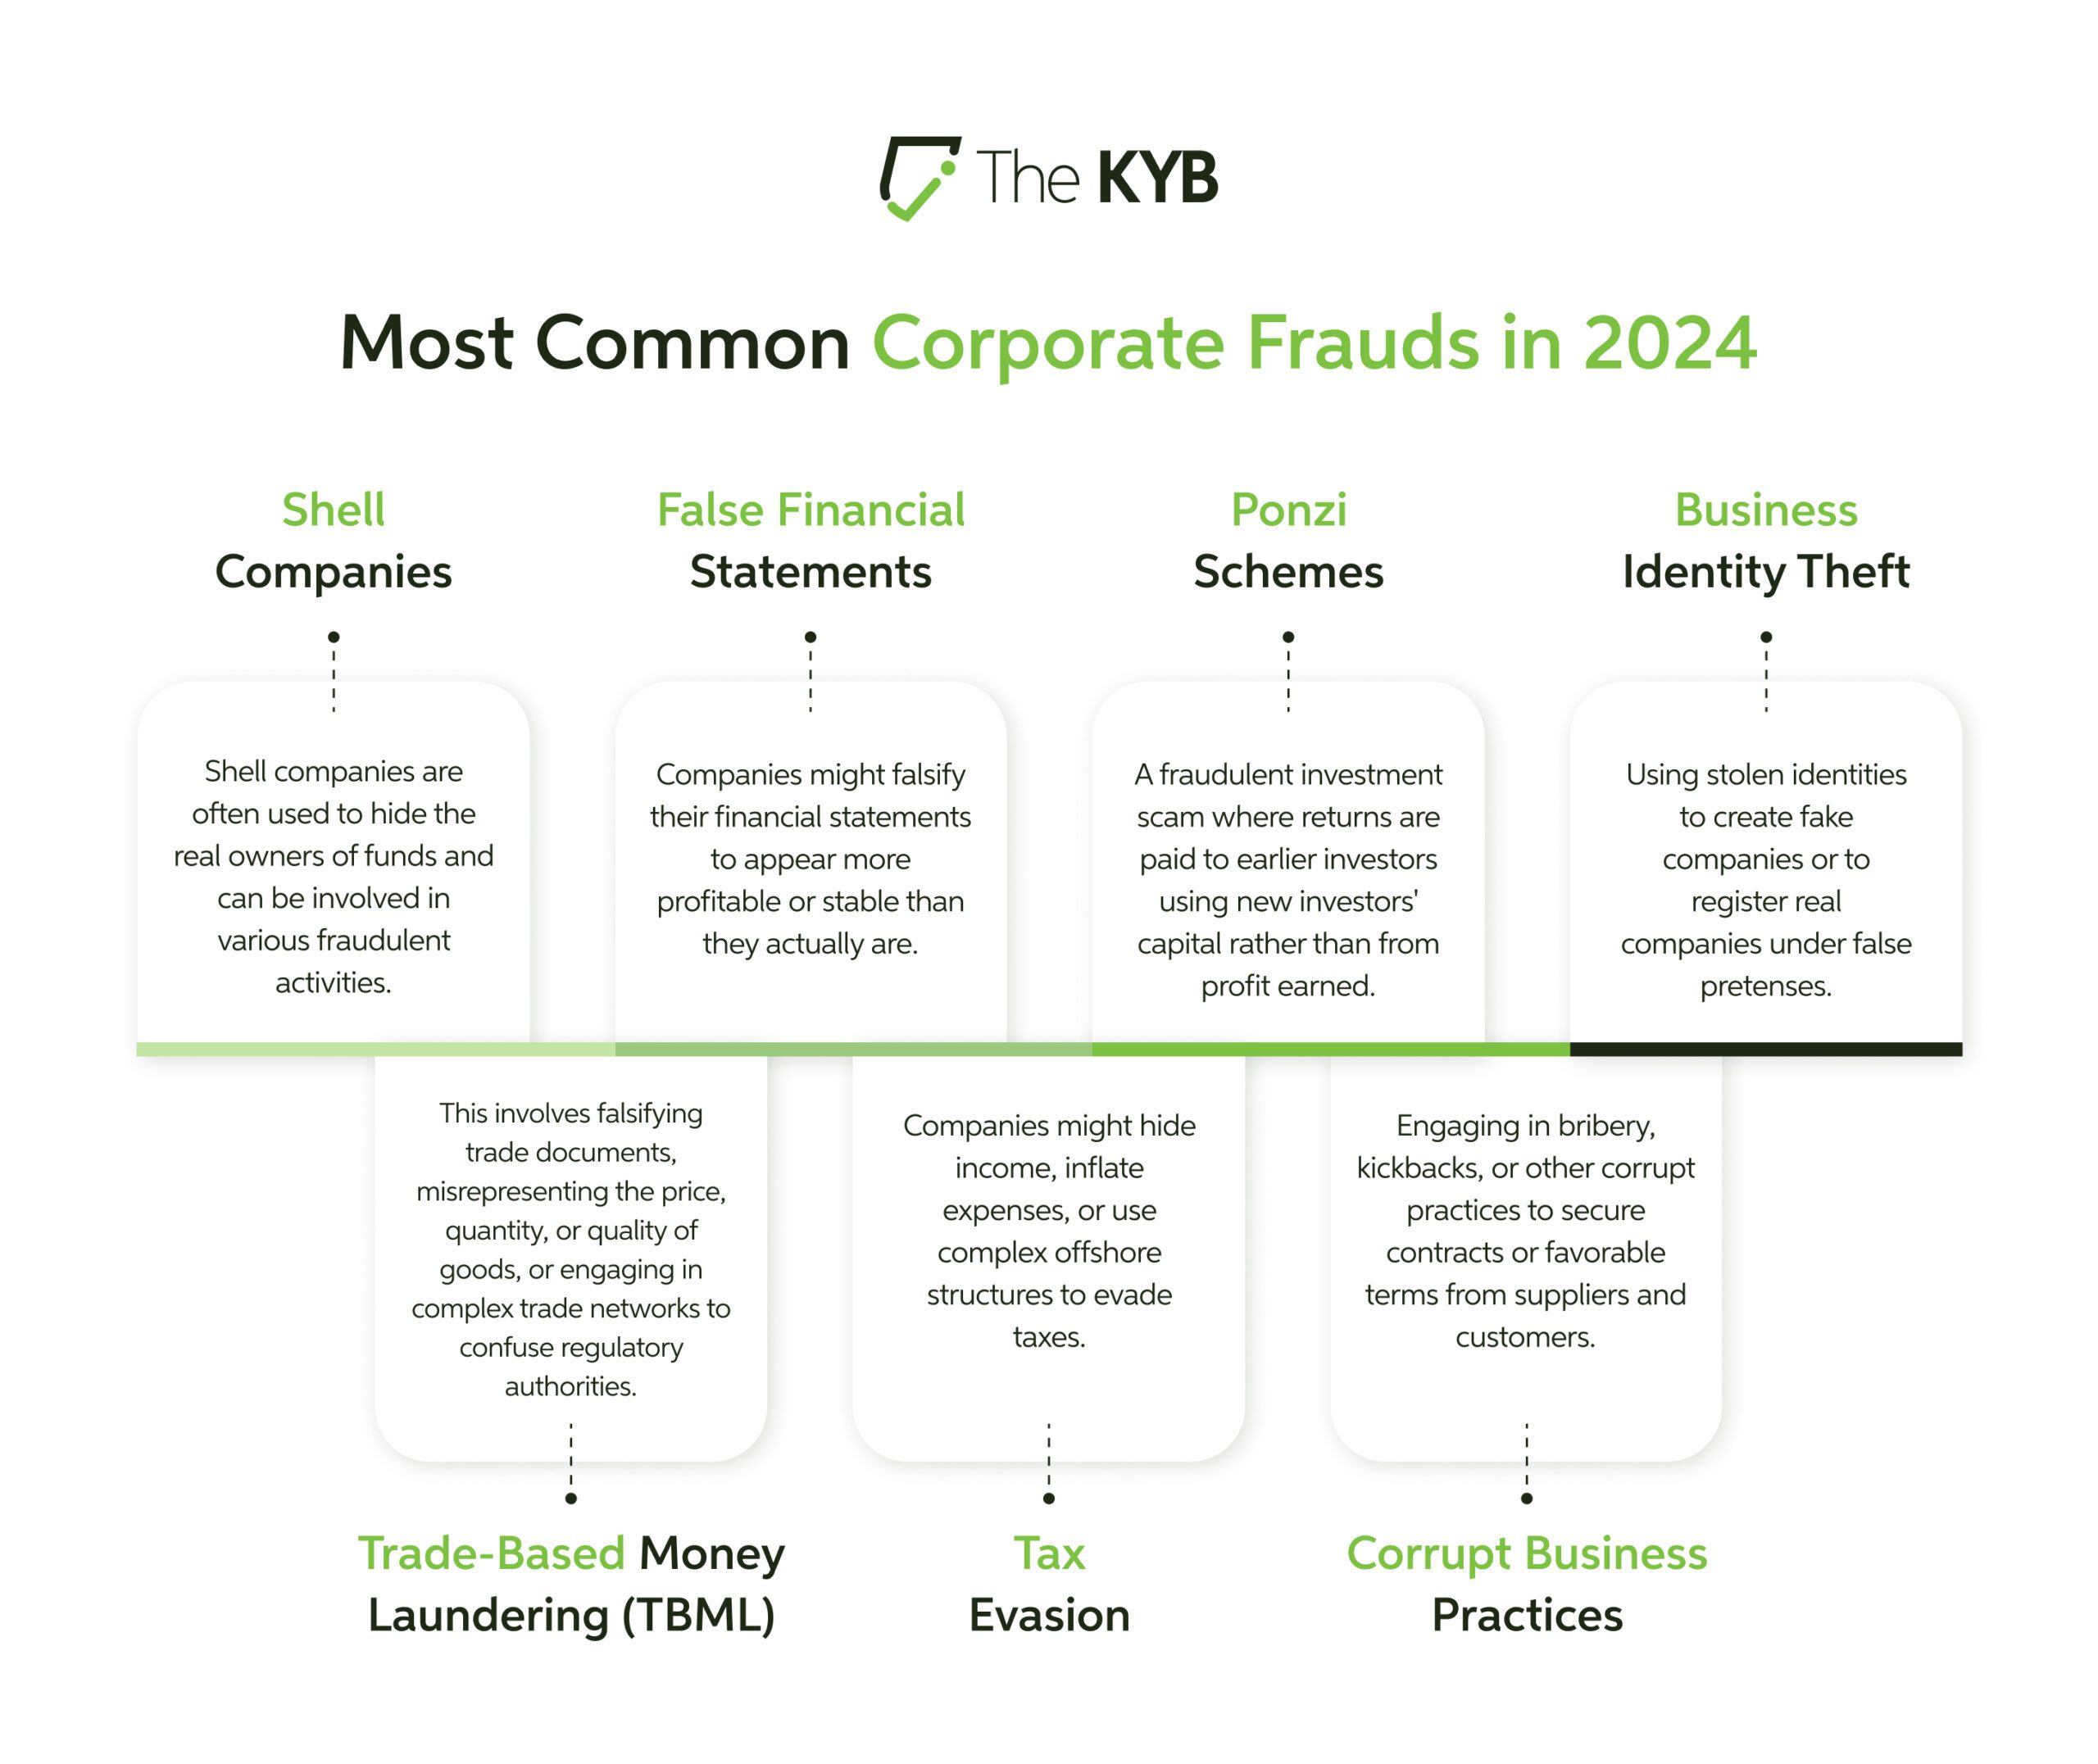 Corporate Frauds in 2024